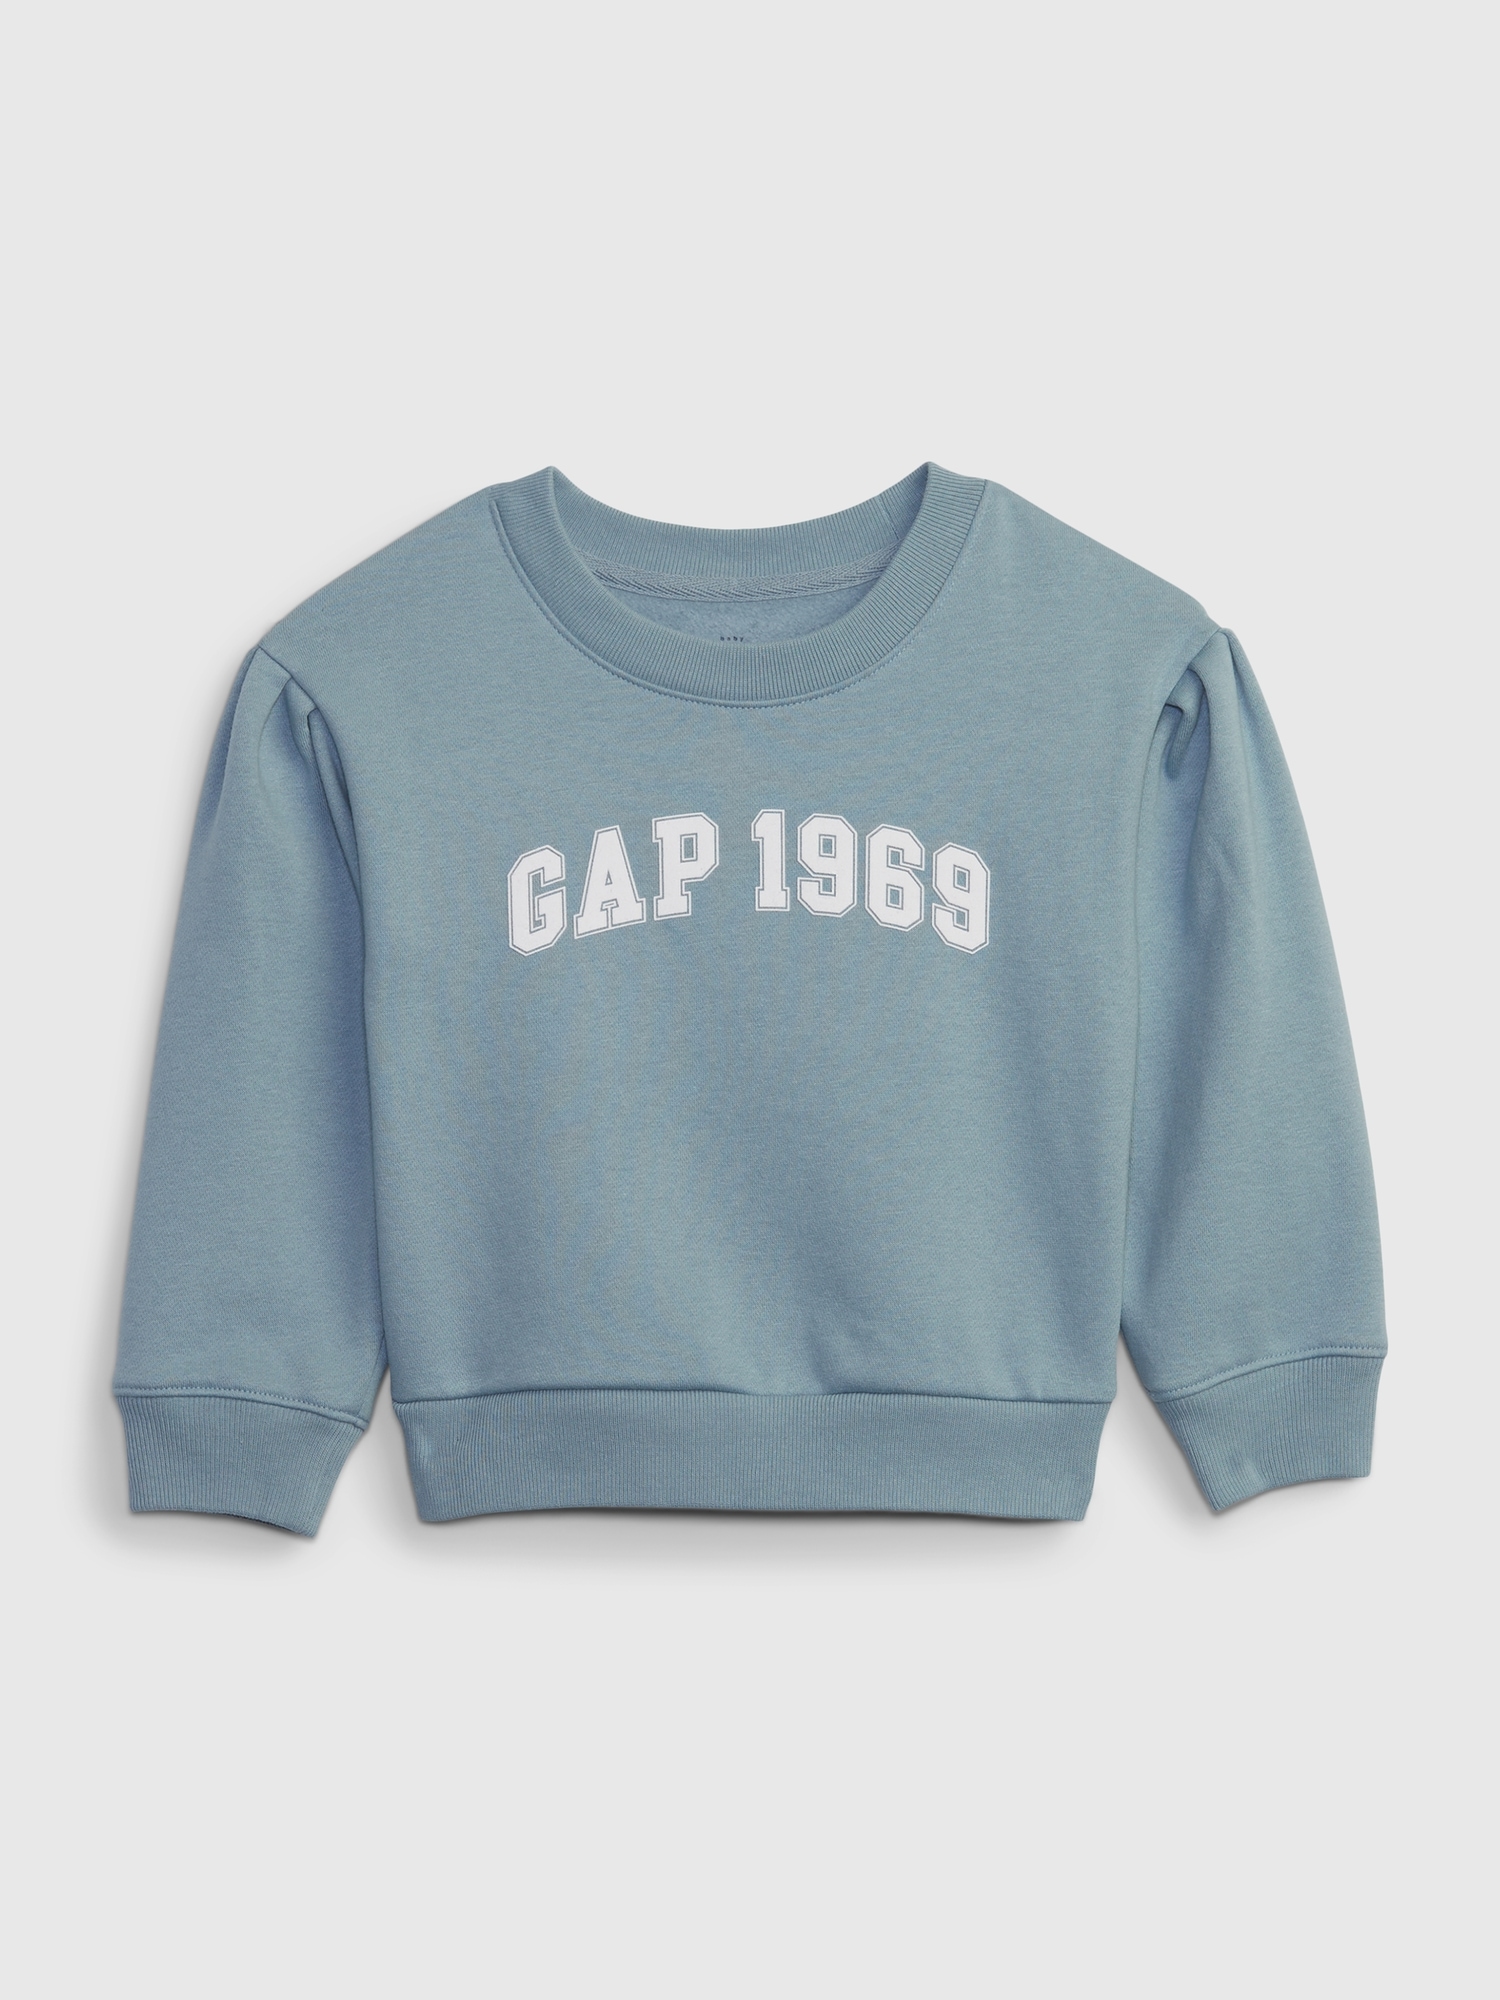 GAP Kids Sweatshirt 1969 - Girls